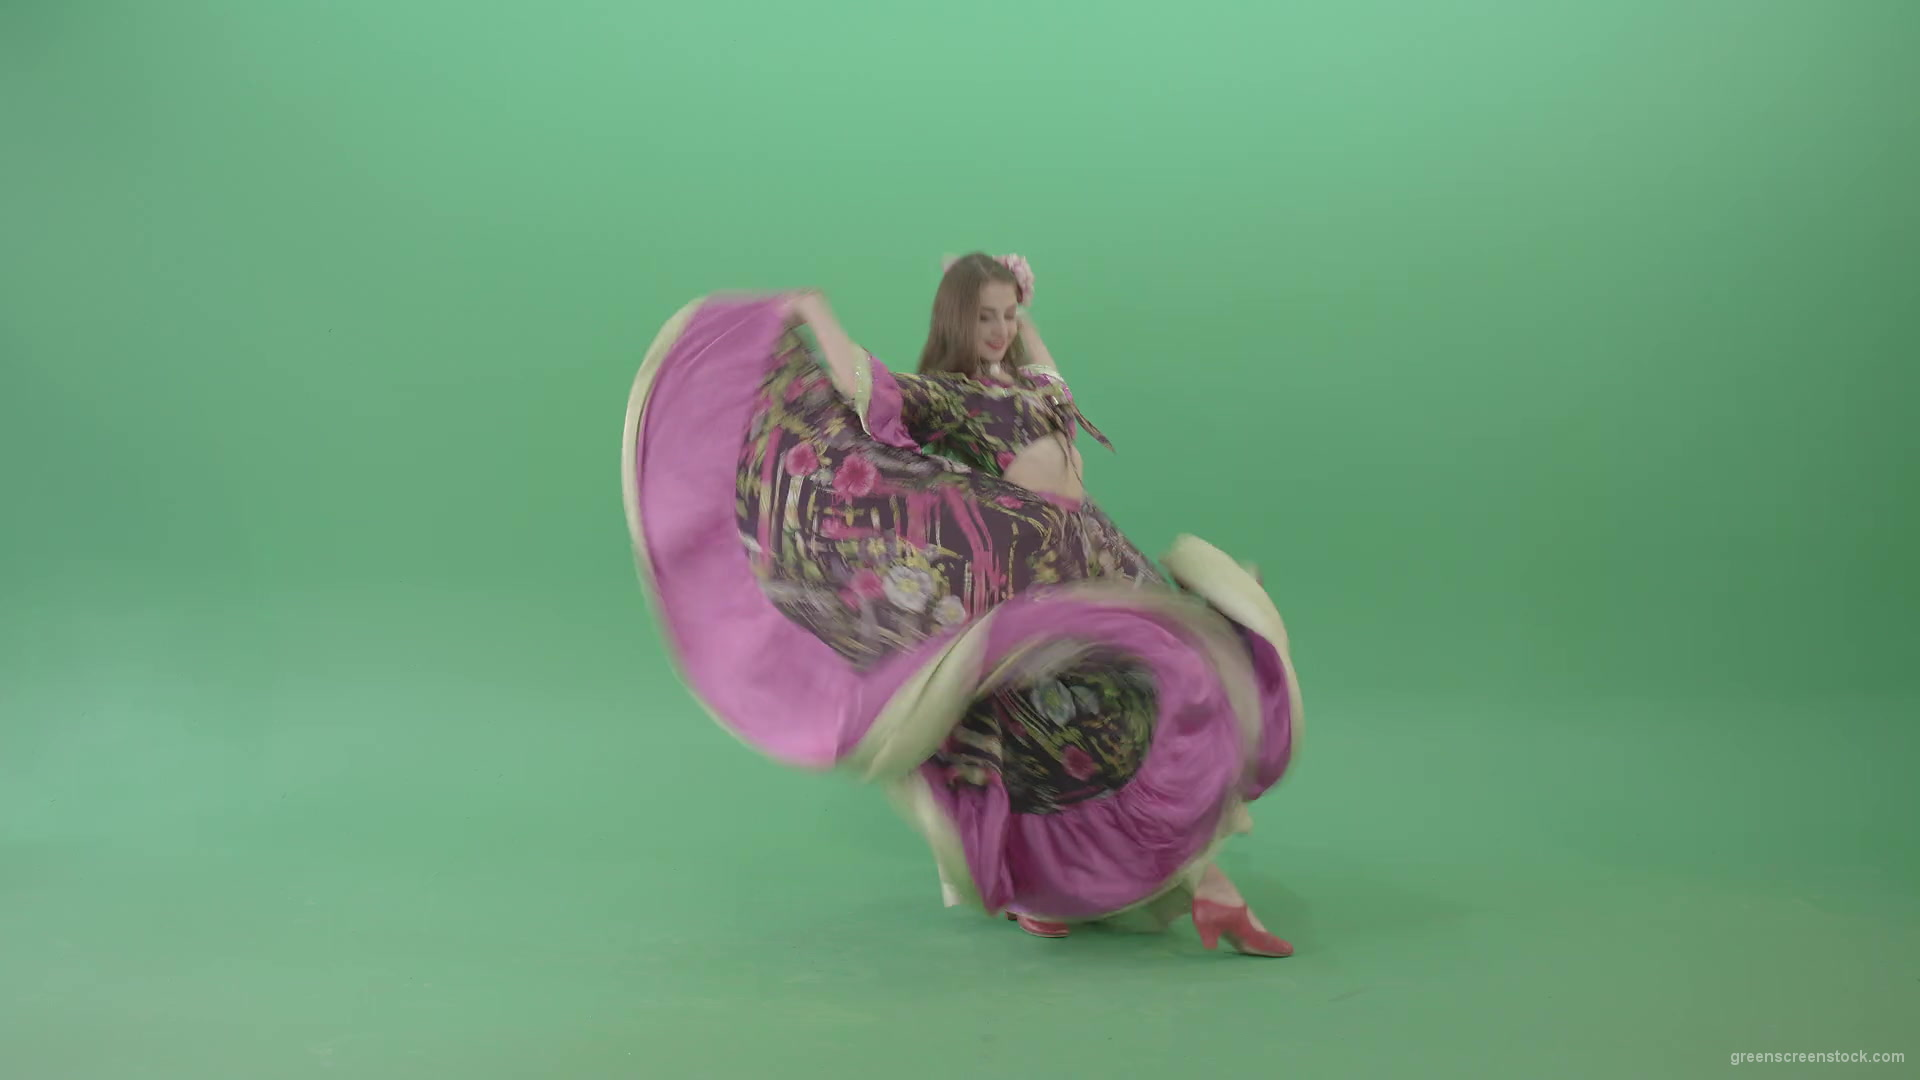 vj video background Lovely-Tzigane-romana-gypsy-women-waving-pink-dress-dancing-folk-isolated-in-green-screen-studio-4K-Green-Screen-Video-Footage-1920_003